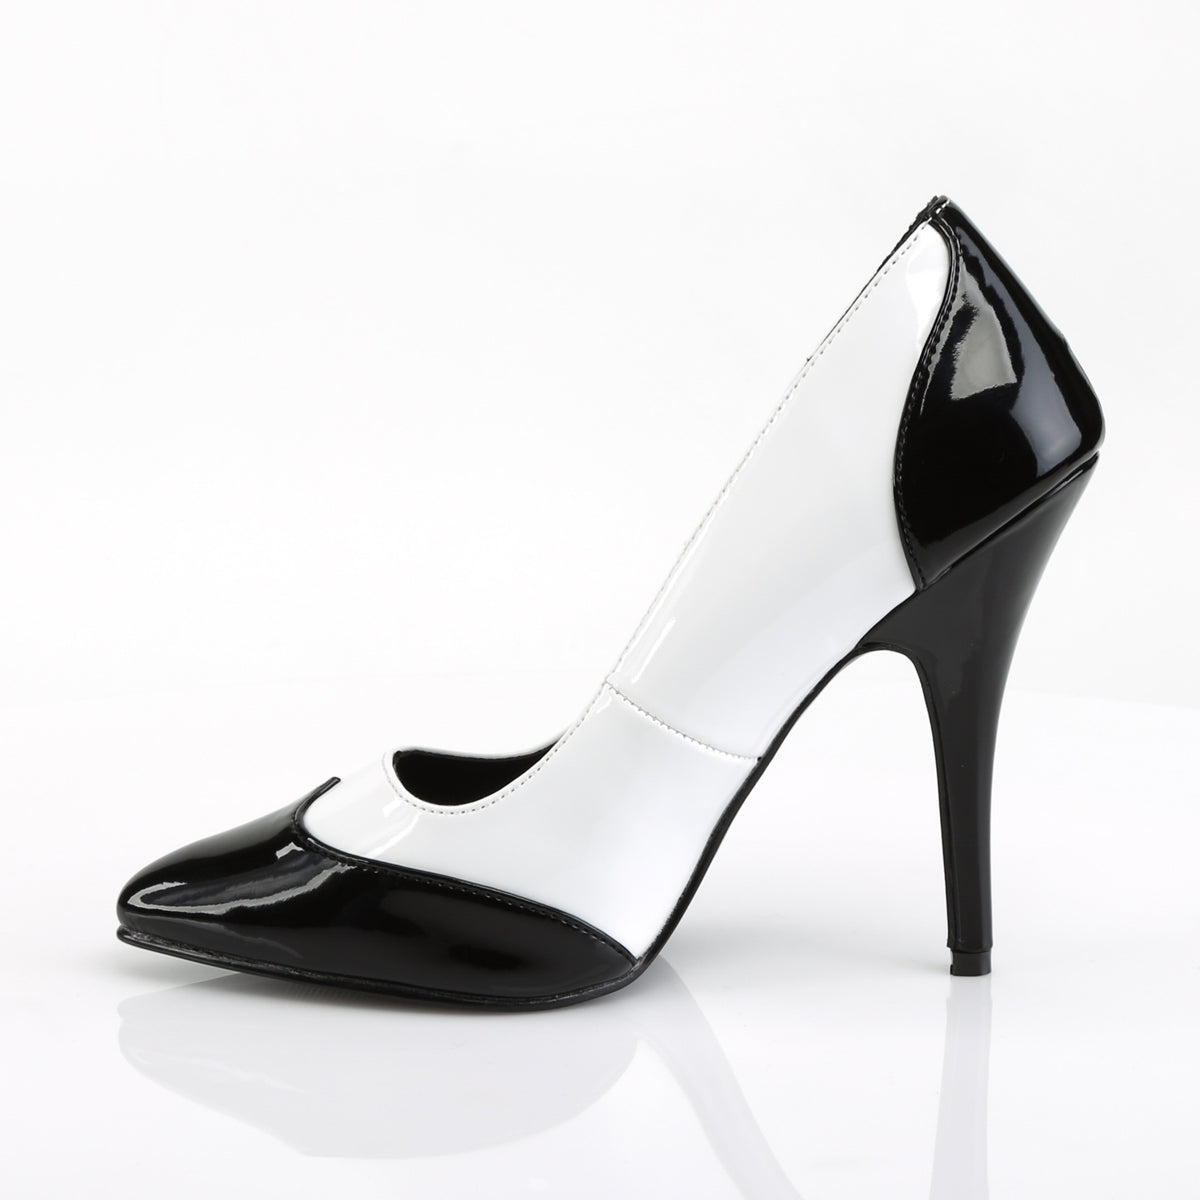 SEDUCE-425 Sexy Shoes 5" Heel Black White Fetish Footwear-Pleaser- Sexy Shoes Pole Dance Heels